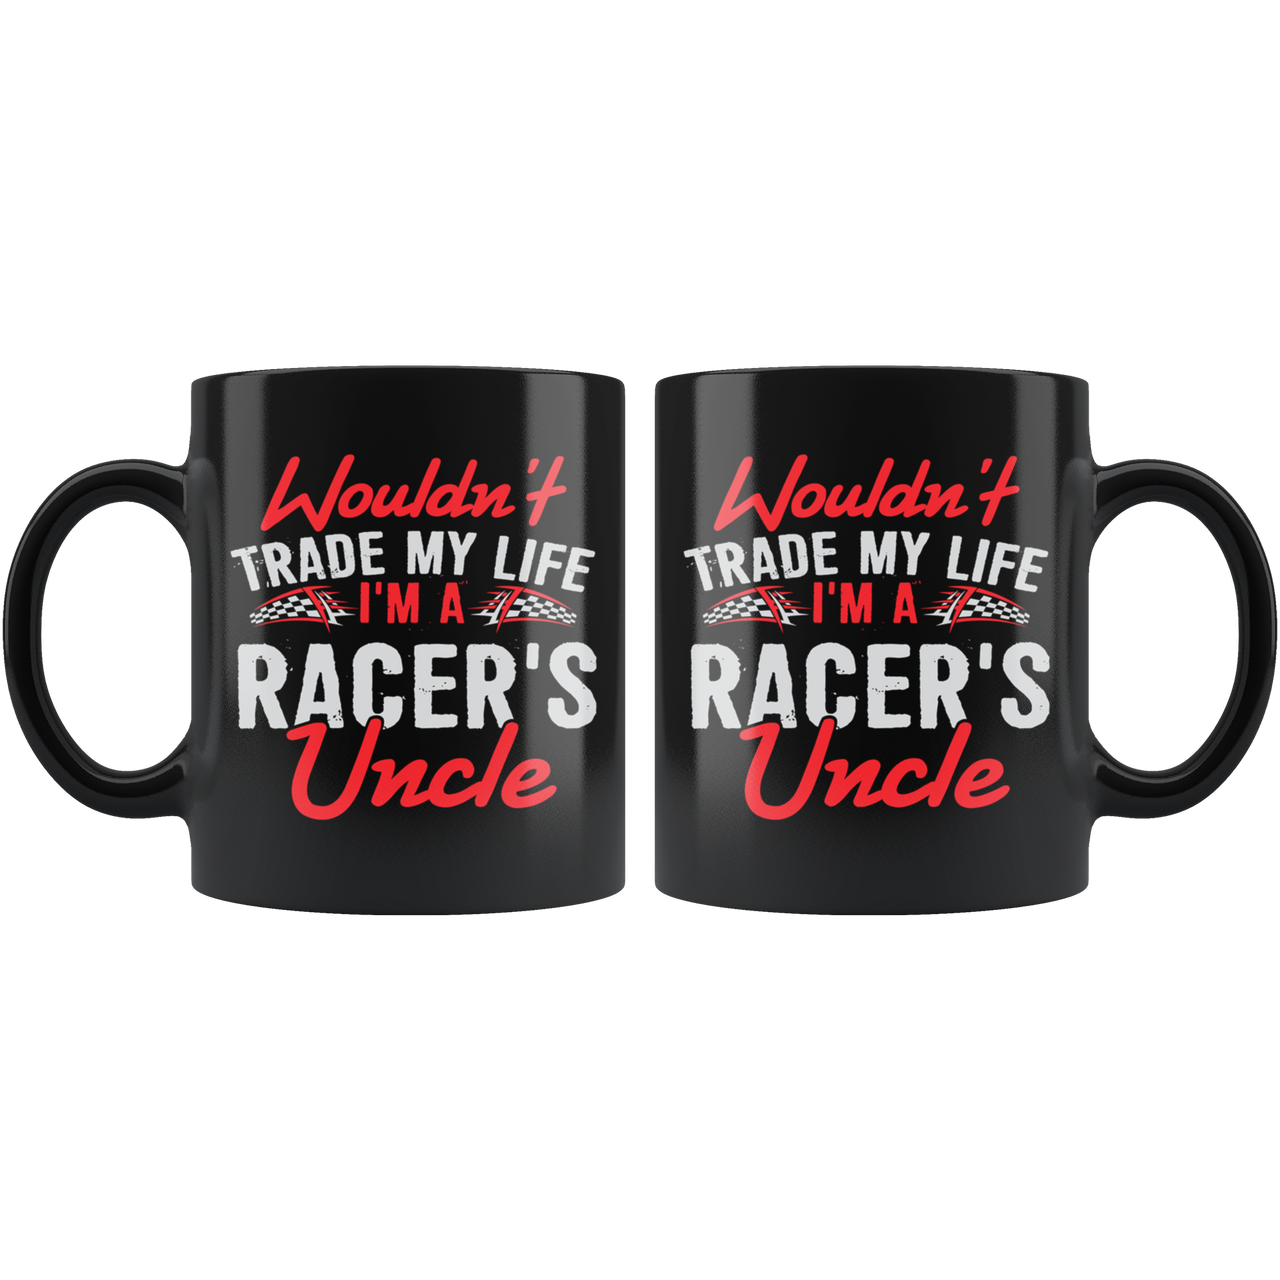 Wouldn't Trade My Life I'm A Racer's Uncle Mug!